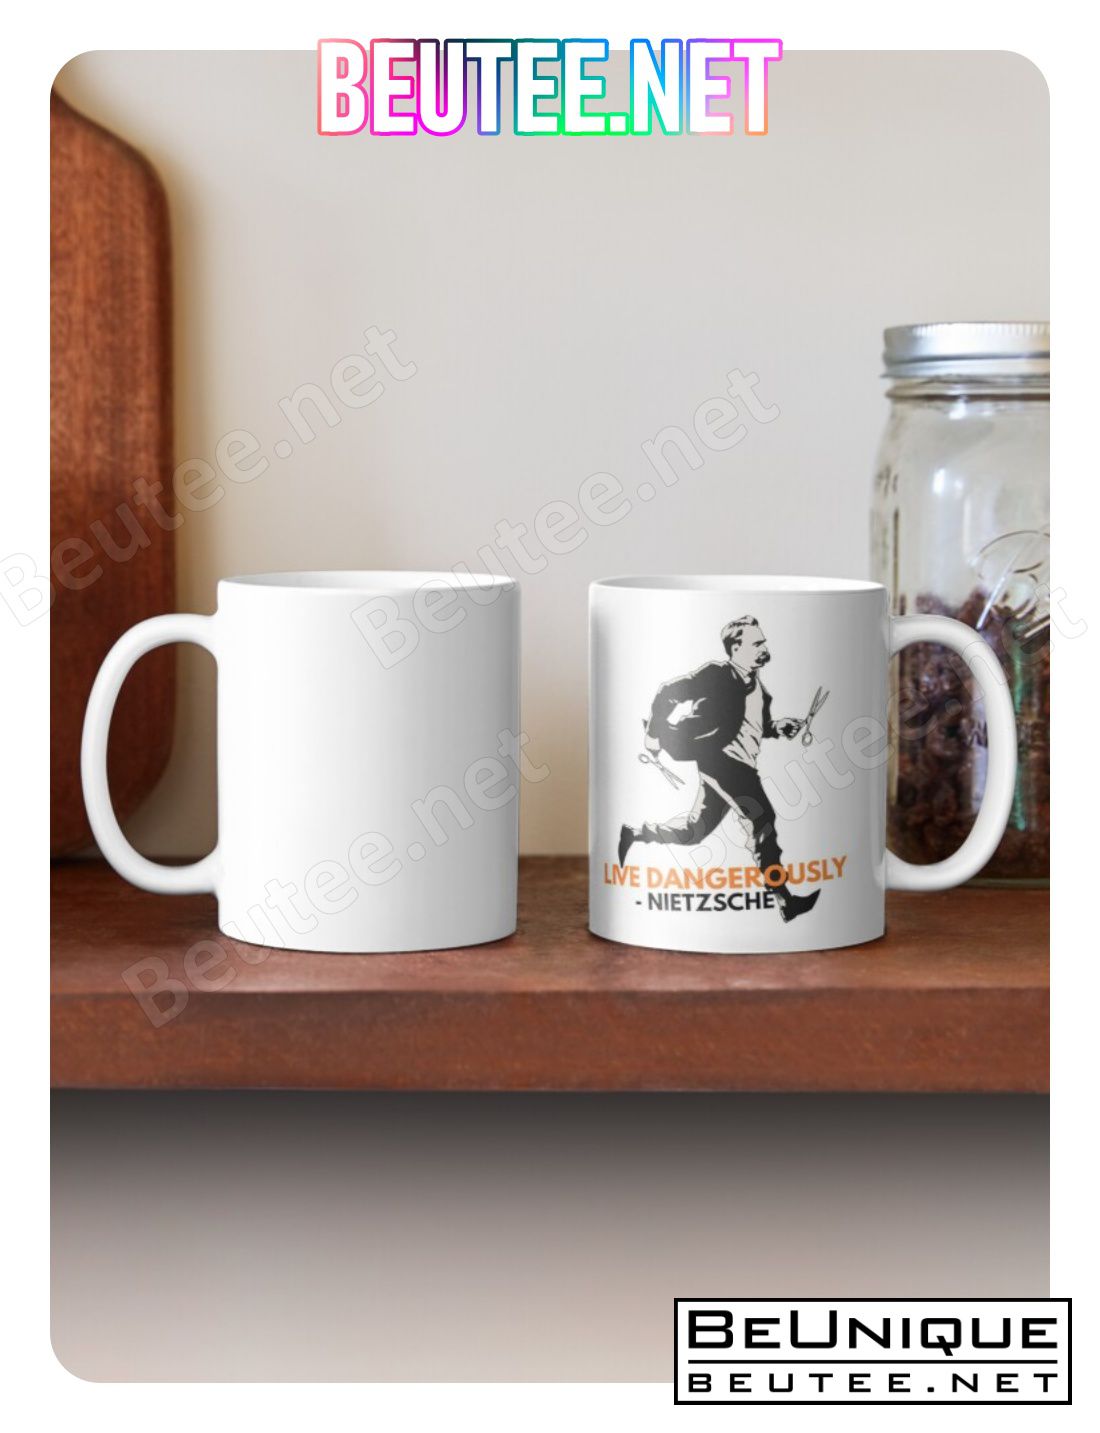 Live Dangerously - Nietzsche Coffee Mug